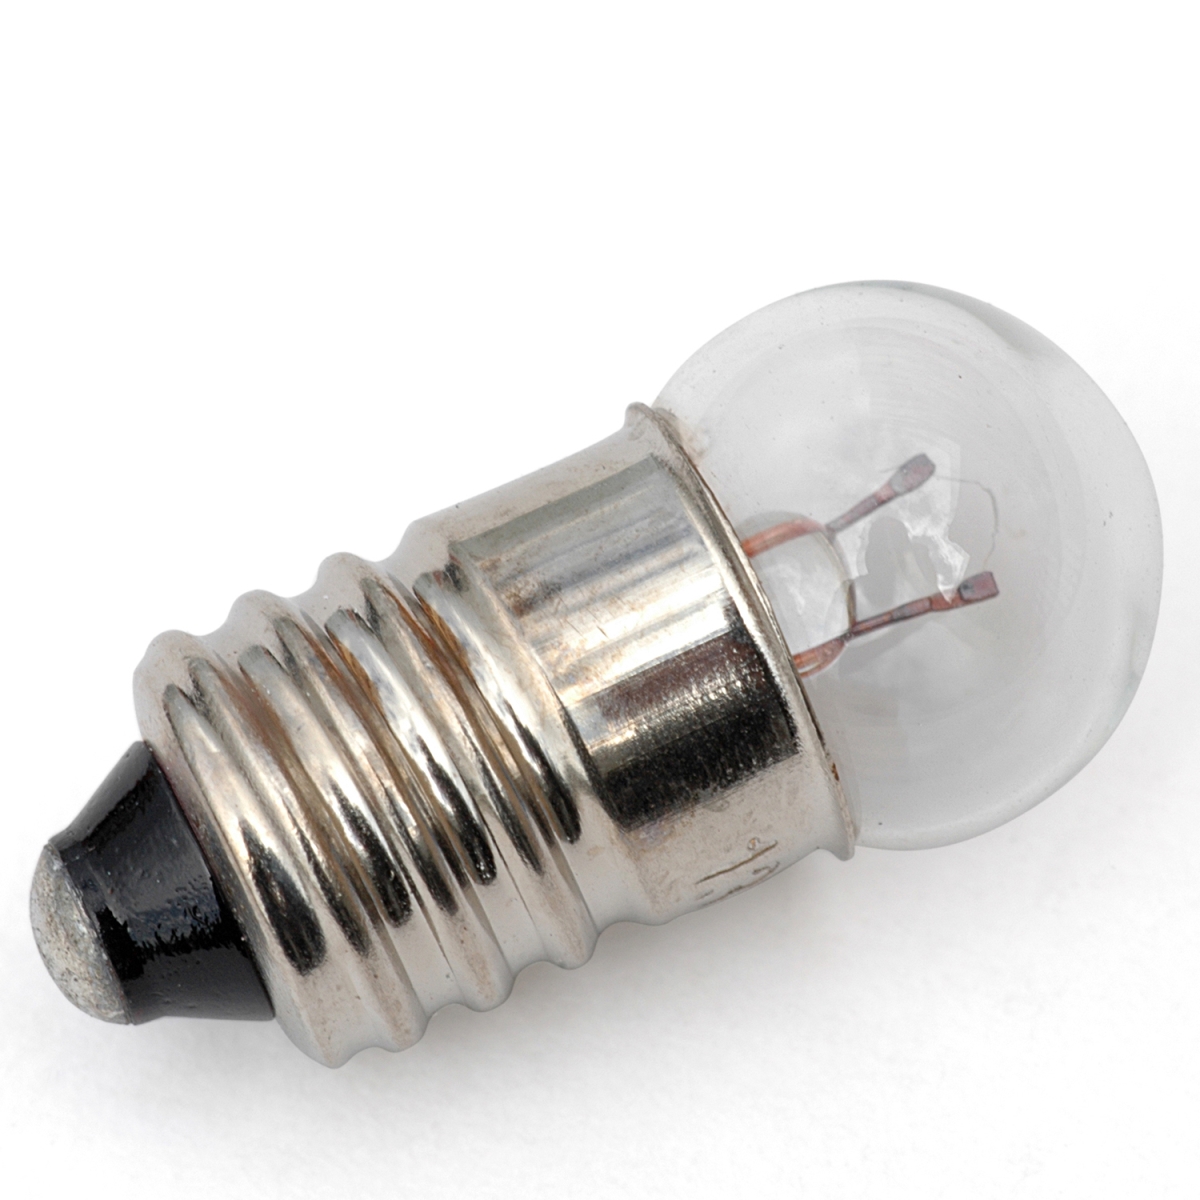 Mb-0224 2.15 V 2 Aaa Cell Miniature Light Bulb, Clear